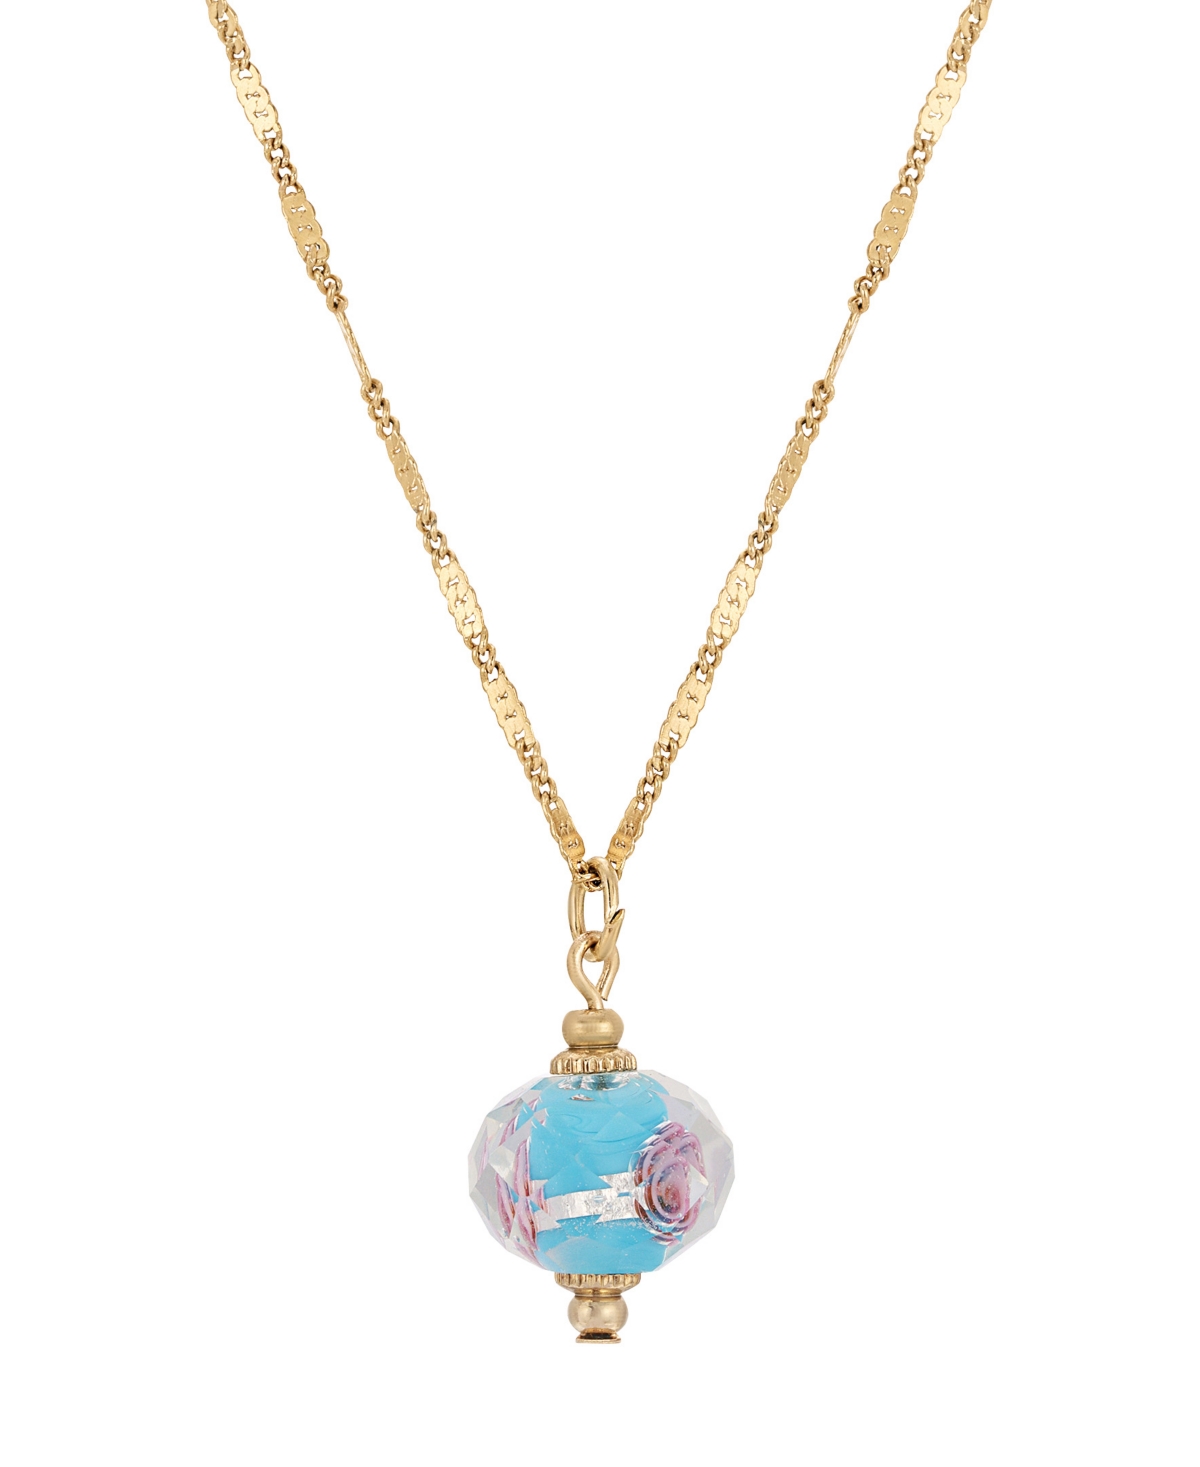 Women's Flower Bead Necklace - Aqua